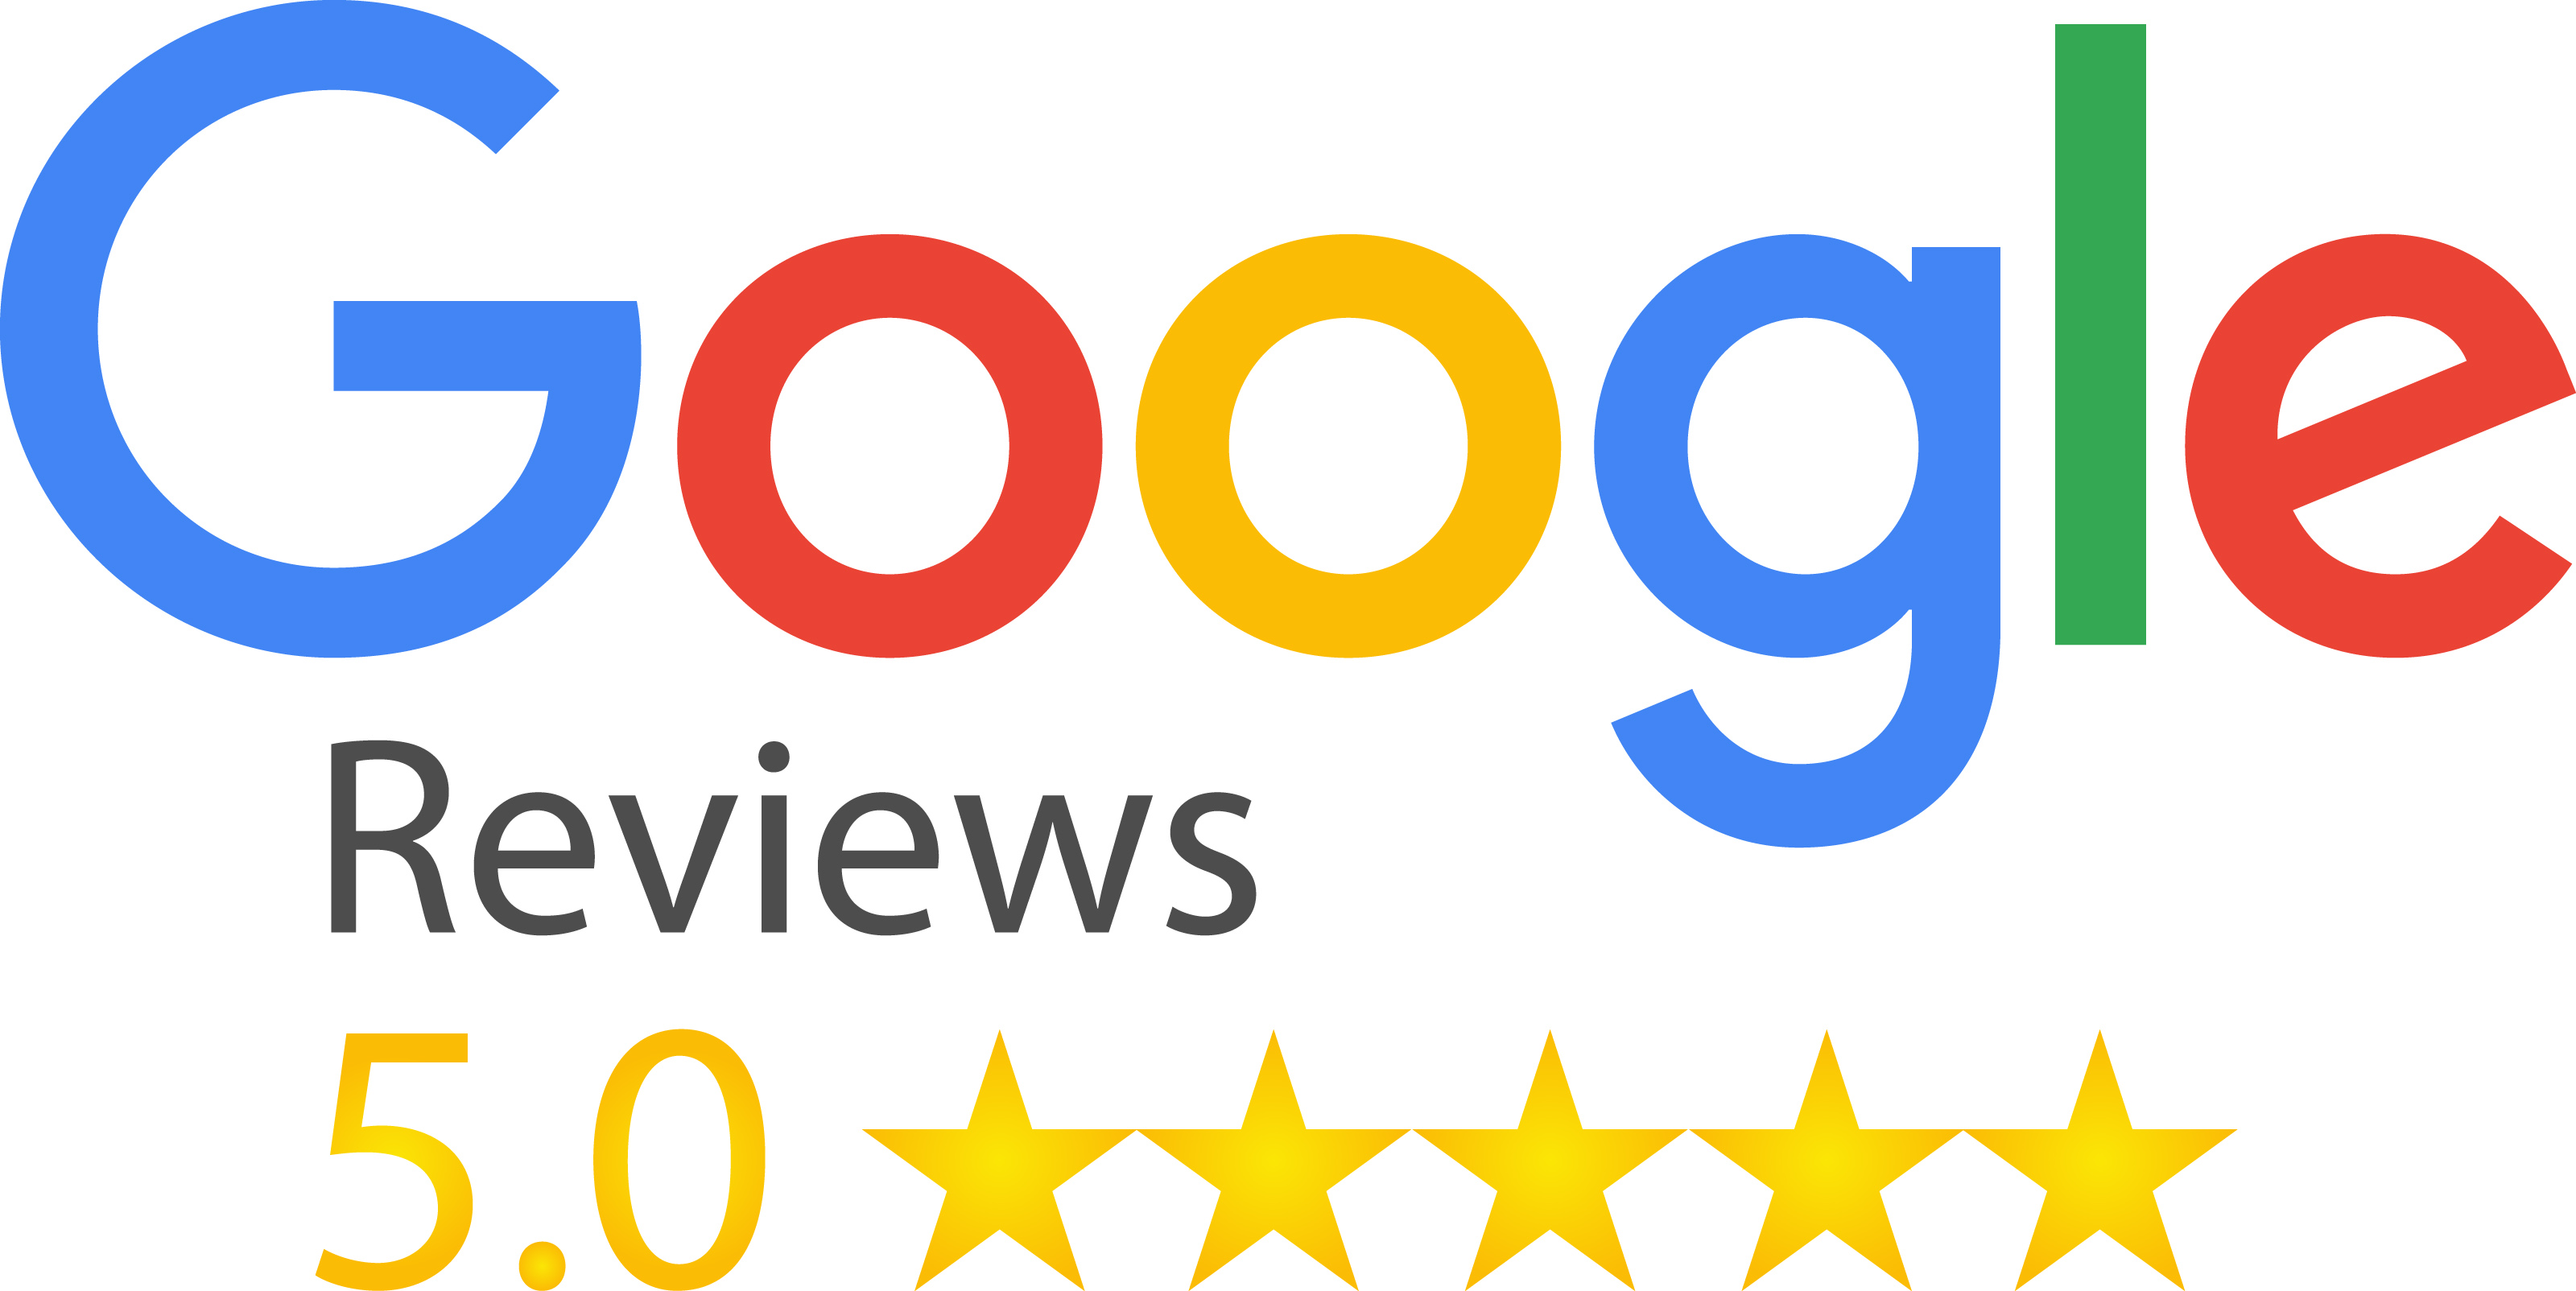 1707-google-5-star-reviews-1.jpg